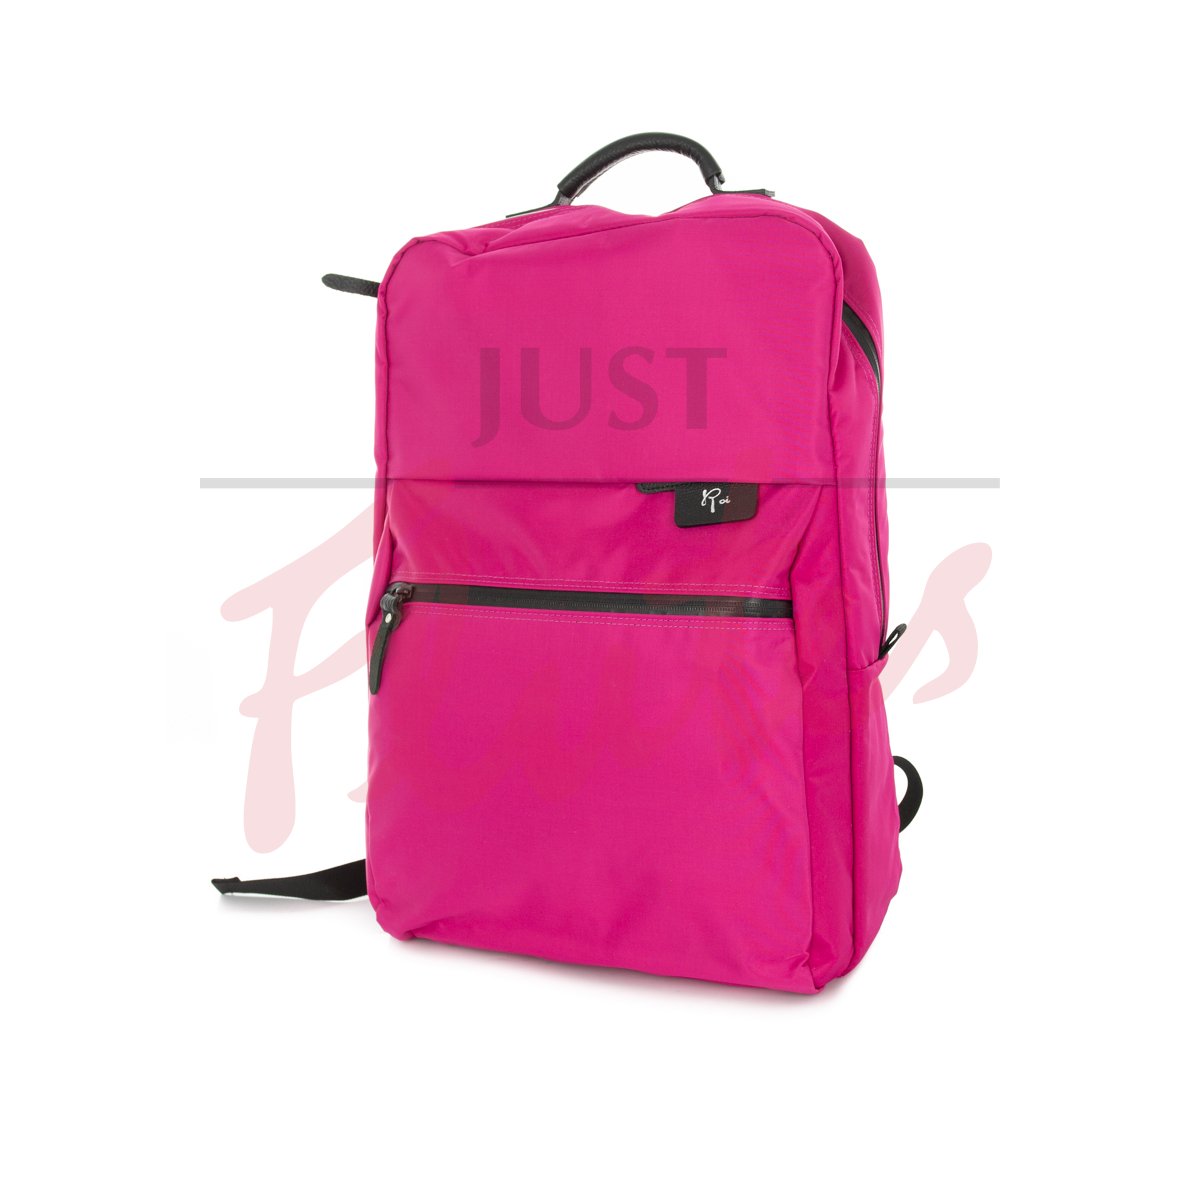 Roi Flute Backpack, Pink